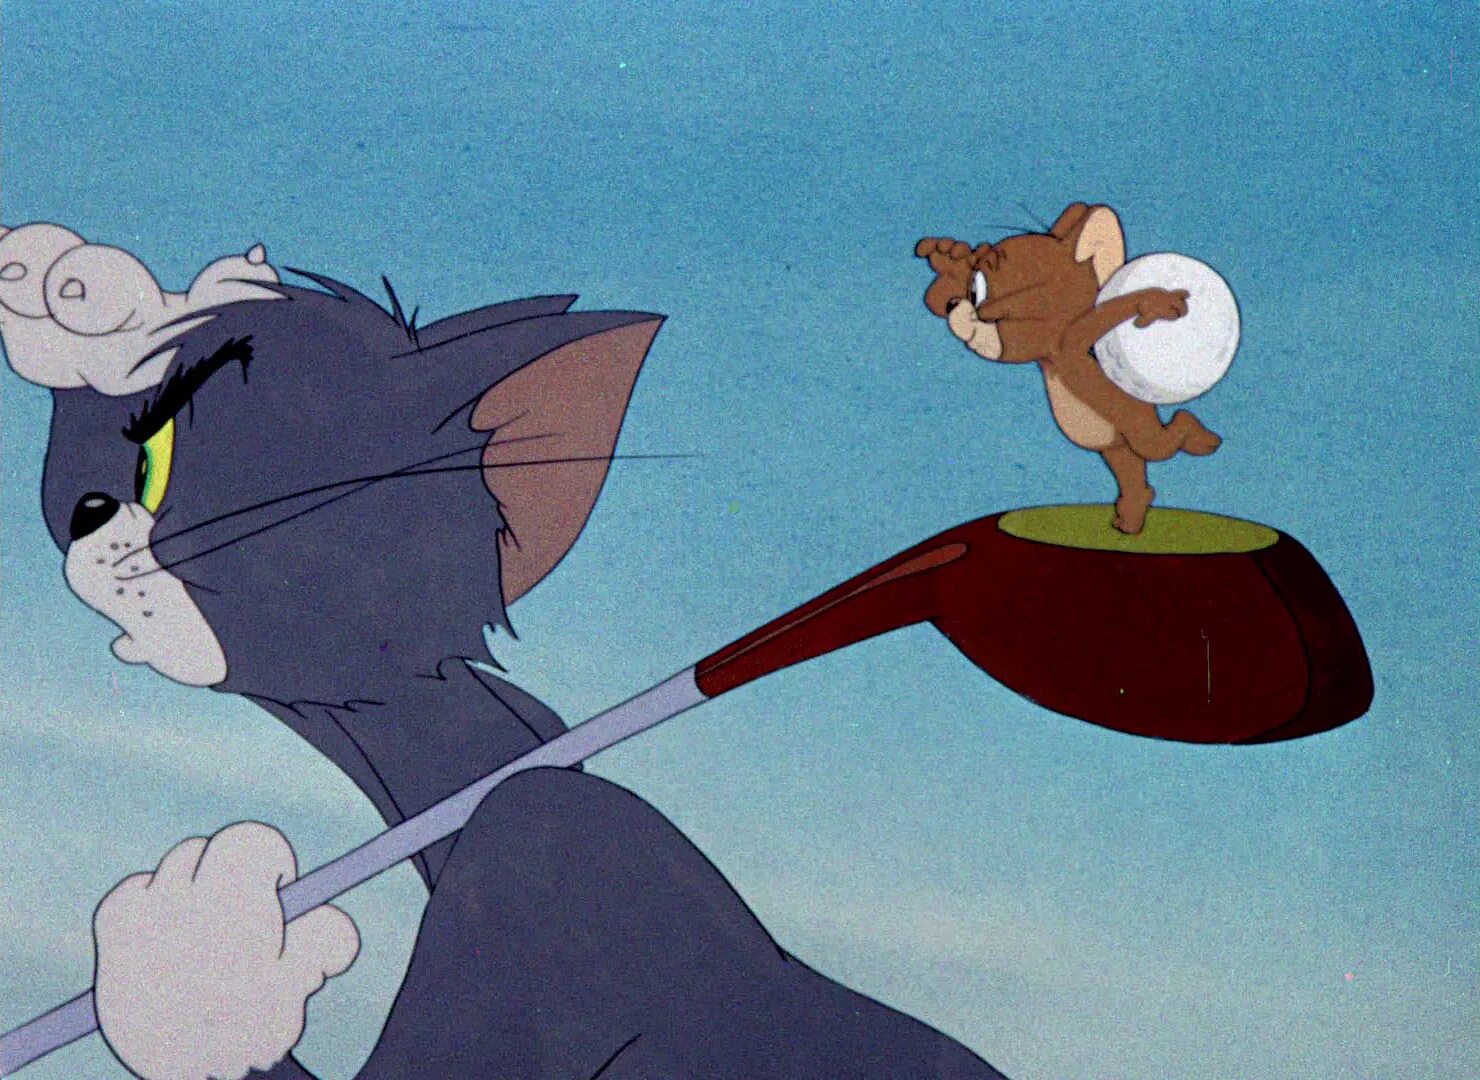 В каком году вышел том и джерри. Том и Джерри Tom and Jerry. Tom and Jerry 1940.